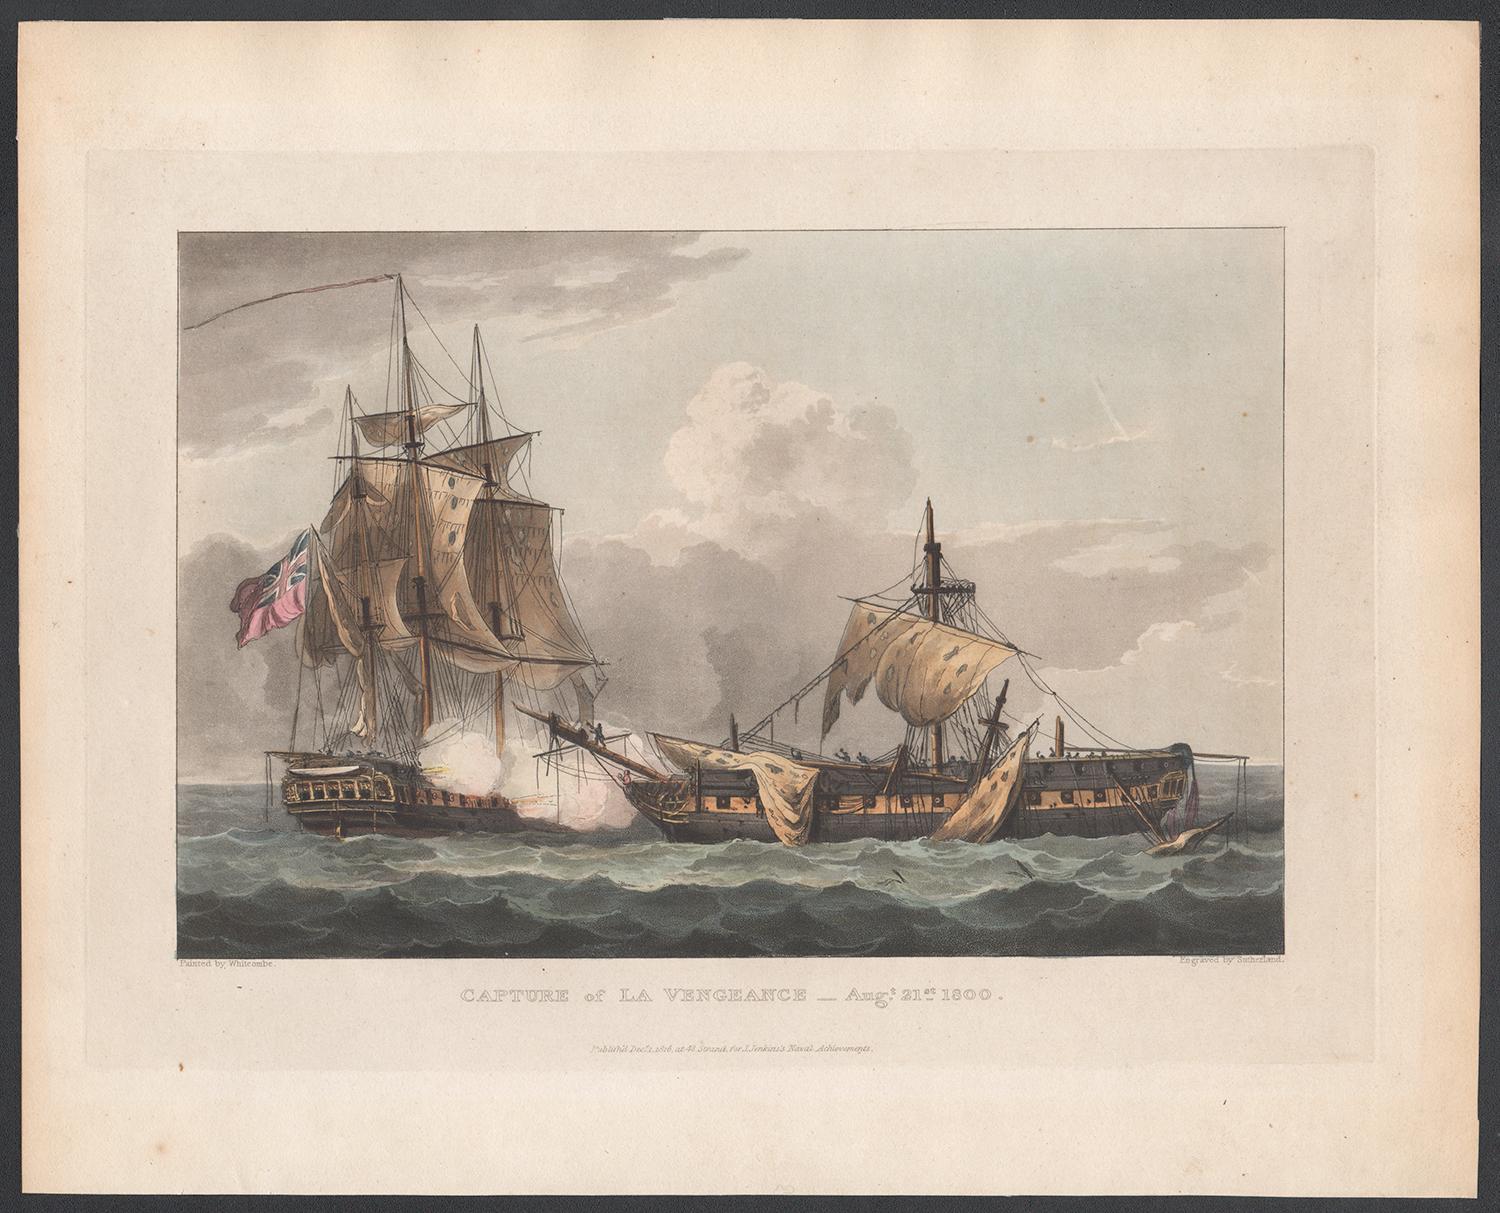 Capture of the La Vengeance, 1800. English Regency naval colour aquatint, 1816 - Print by Thomas Whitcombe